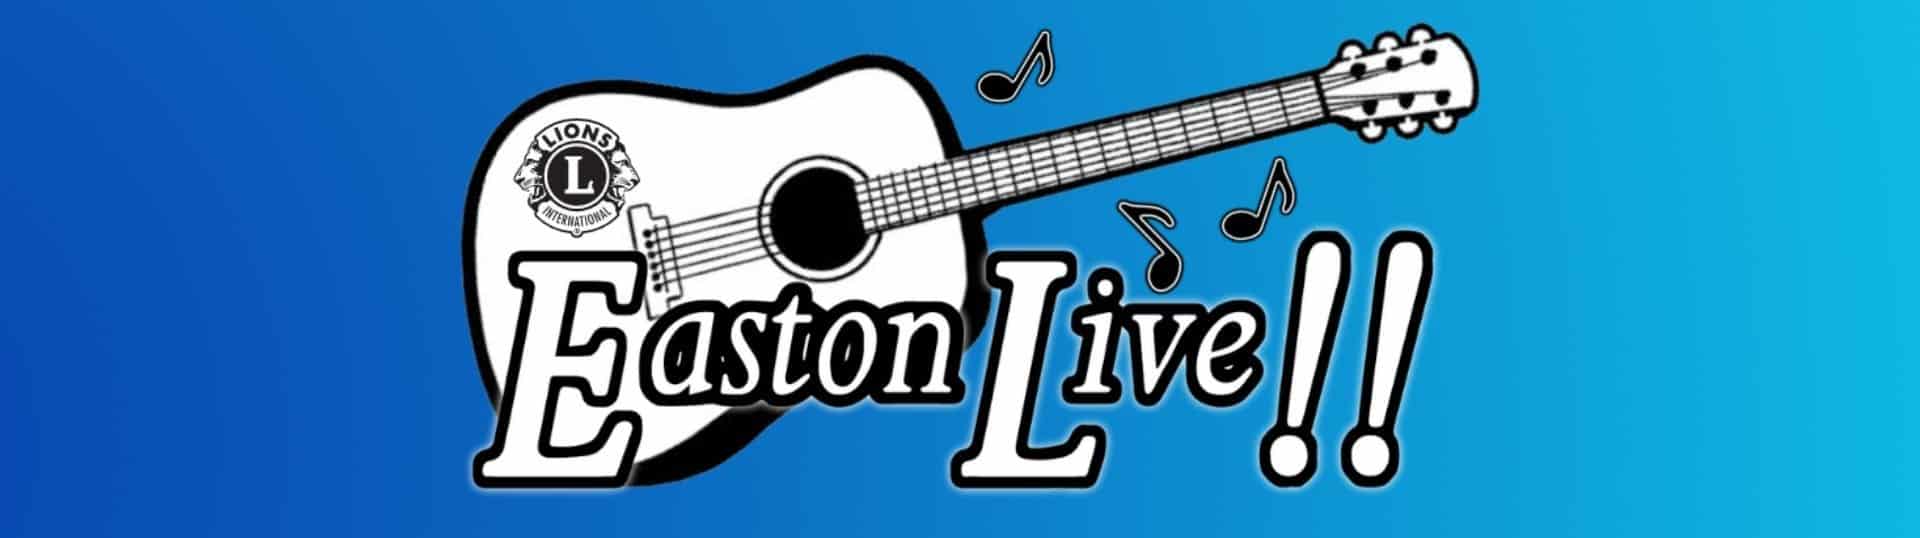 Eastion Live Event Banner